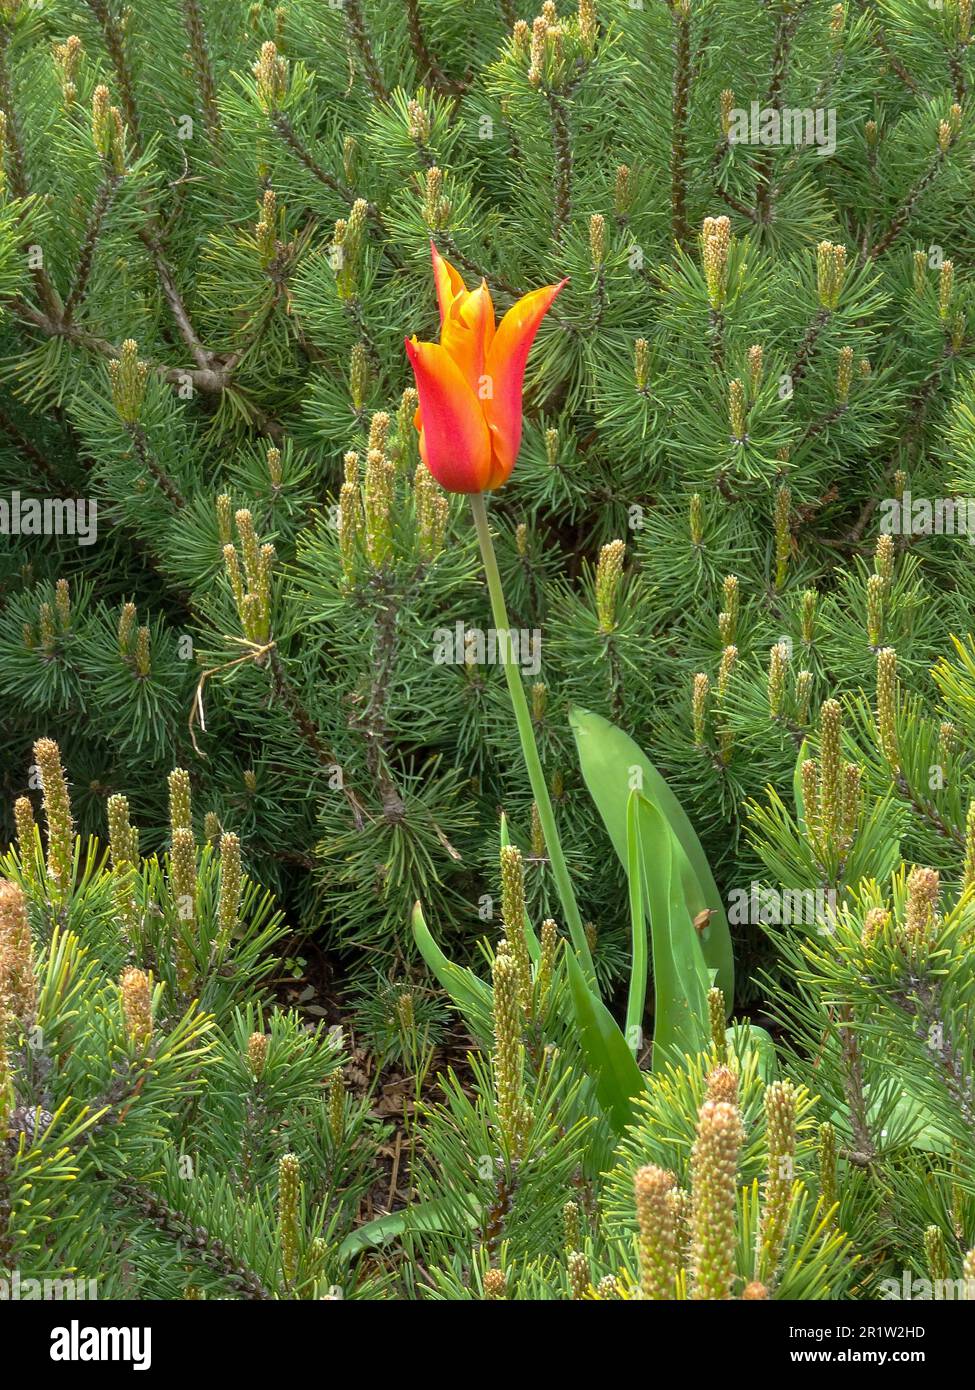 Pinus mugo (Pumilio Group) 'Emerald Dwarf’, and single Tulipa ballerina basking in spring sunshine. natural close up plant portrait Stock Photo